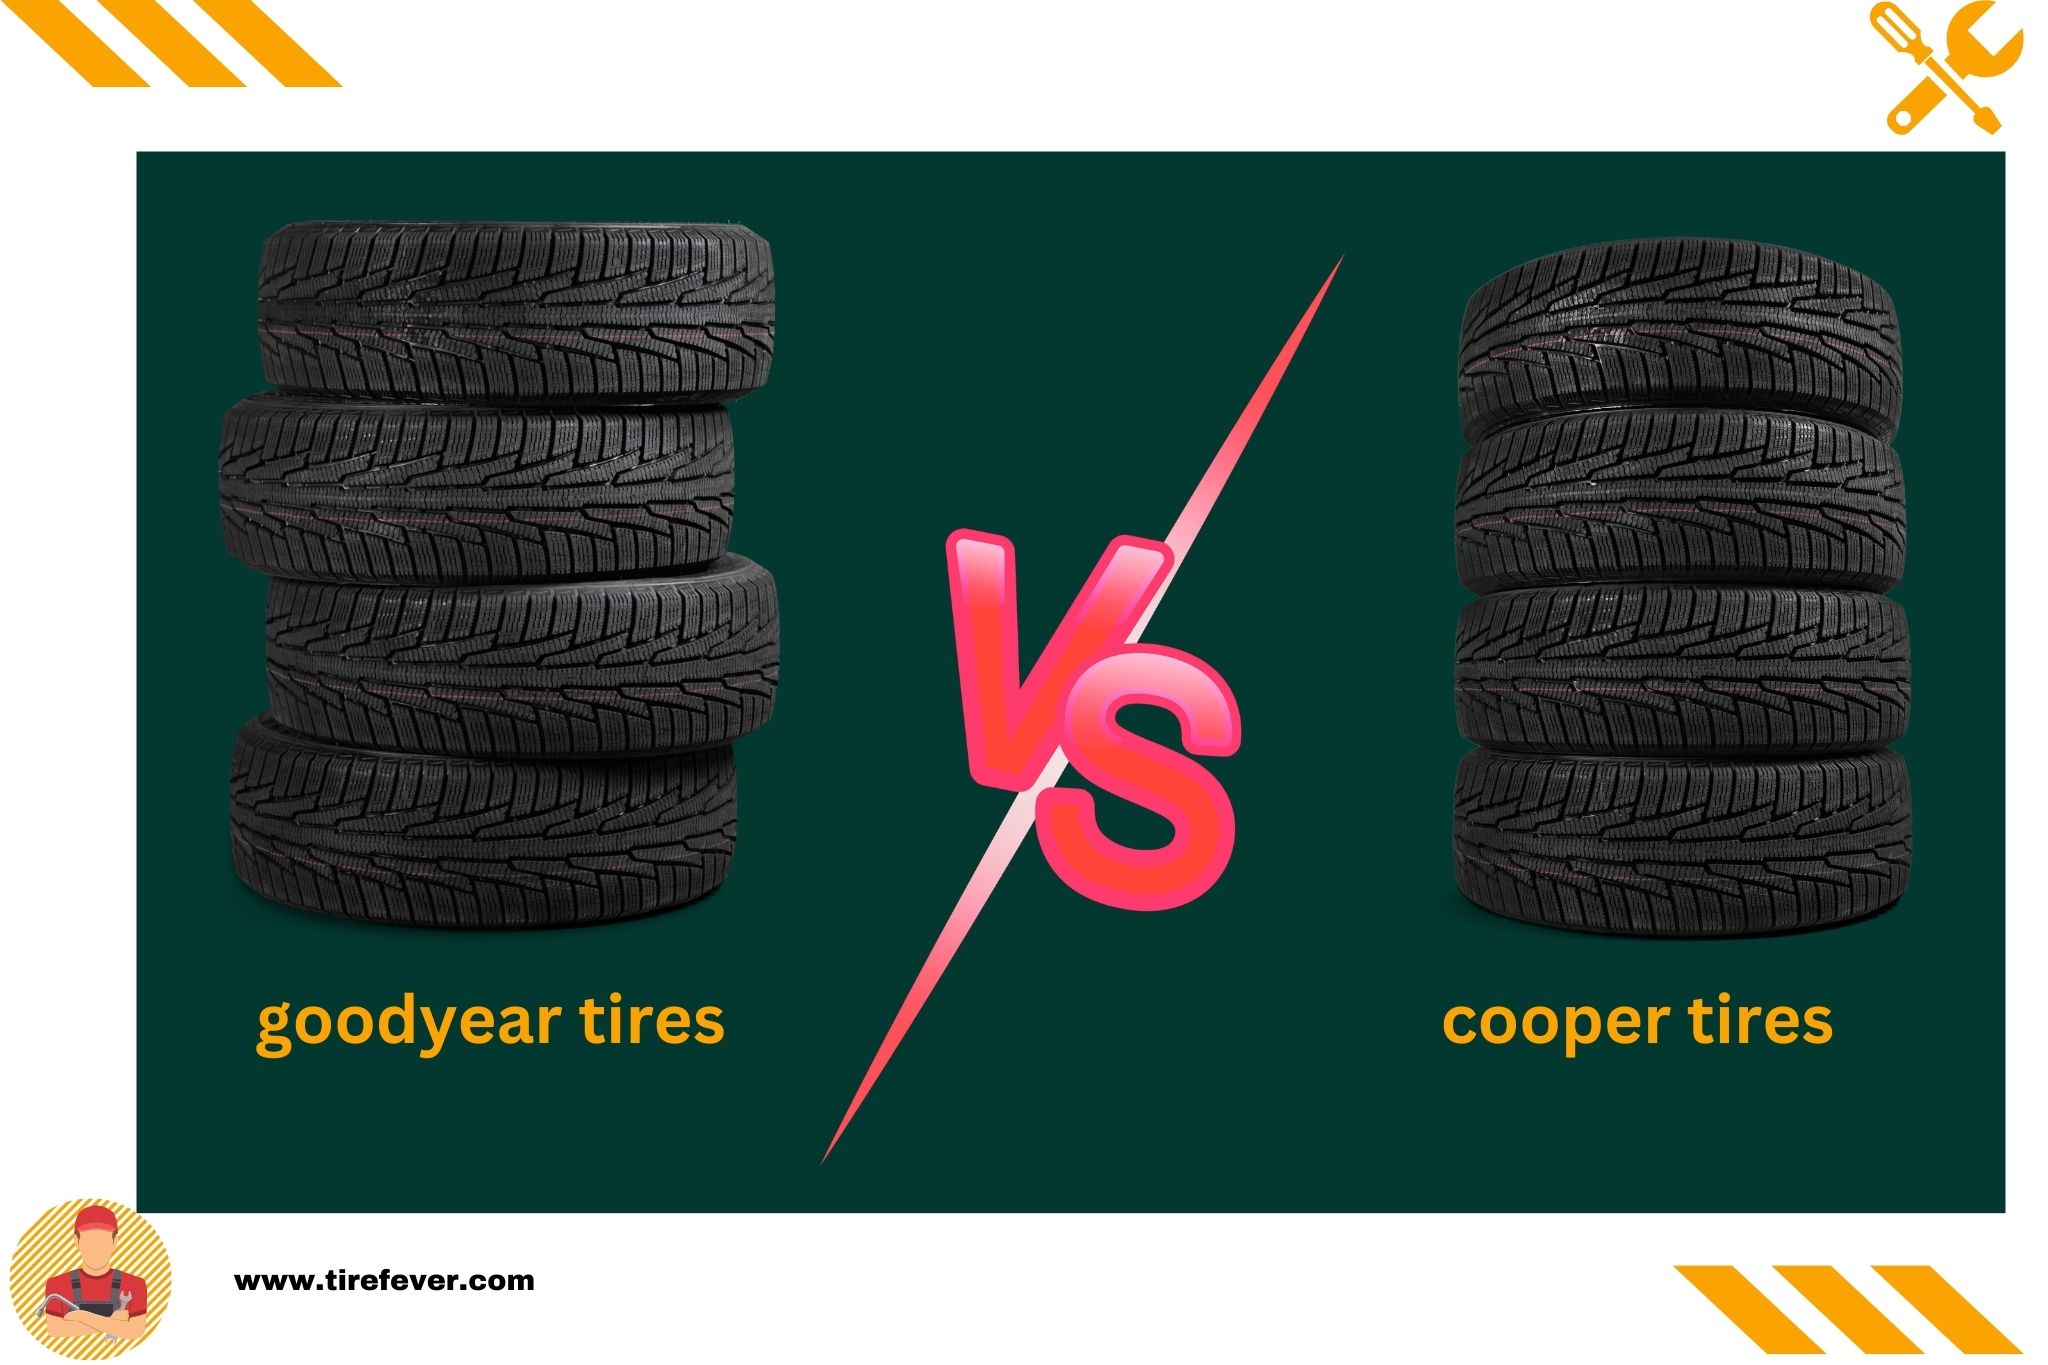 goodyear tires vs cooper tires